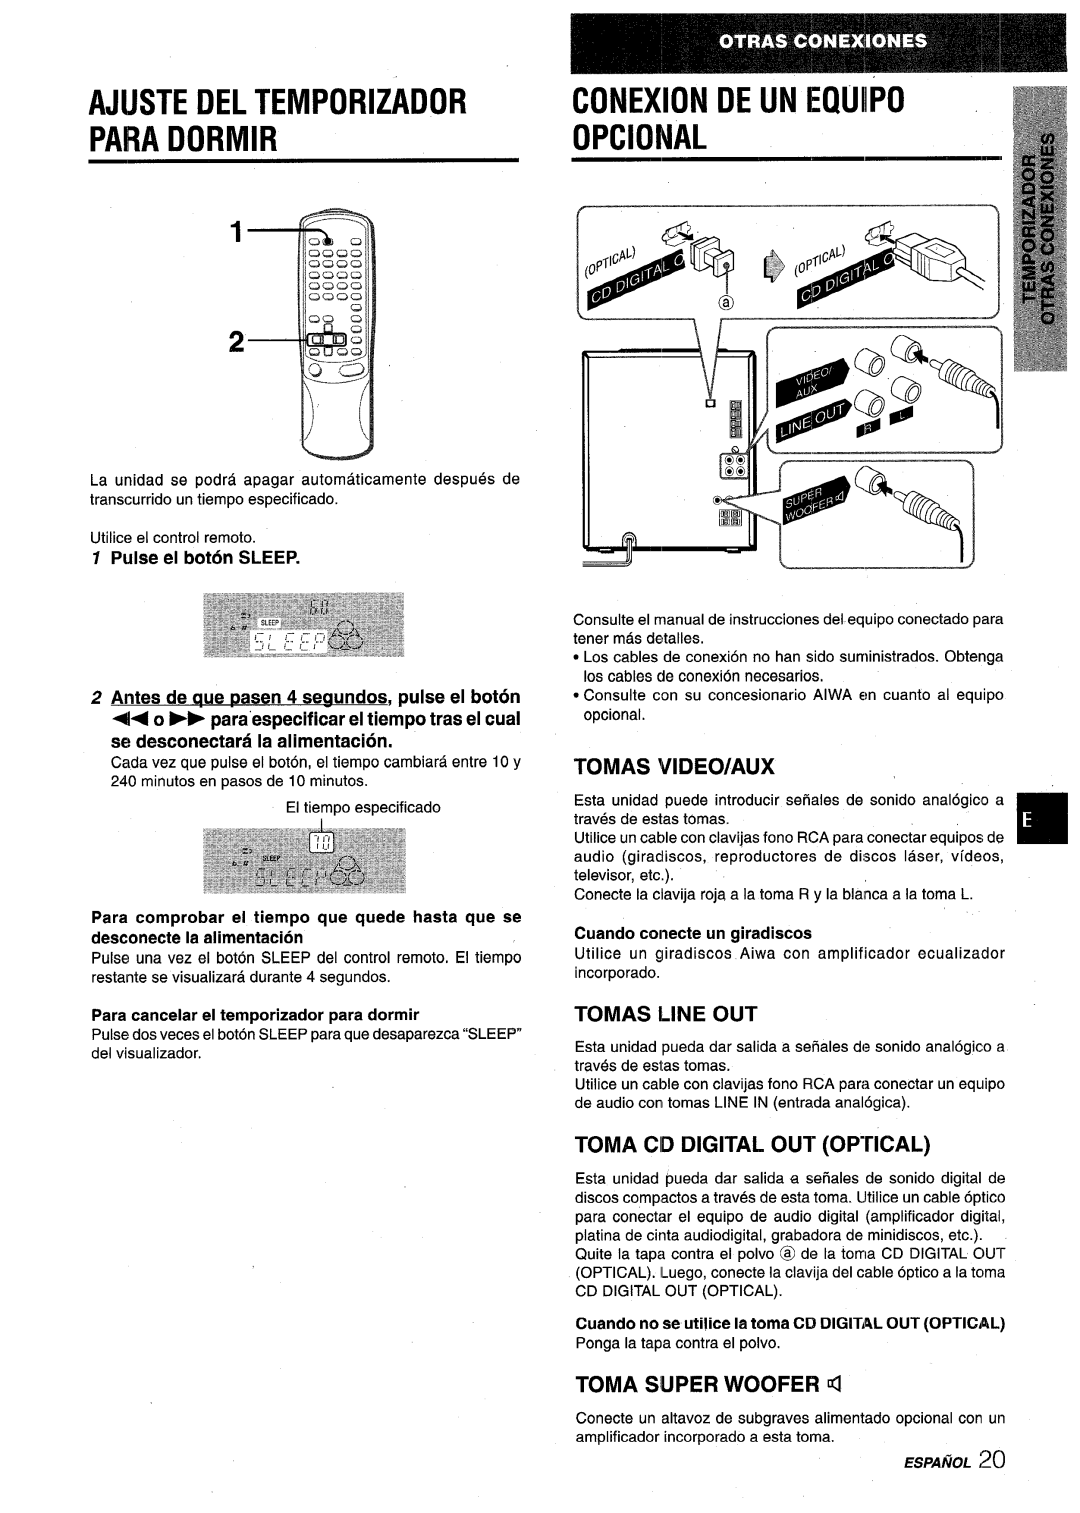 Aiwa NSX-V9000 Ajuste Del Temporizador, Para Dormir, Opcional, Conexion De Un Hiuipo, Tomas Video/Aux, Tomas Line Out 